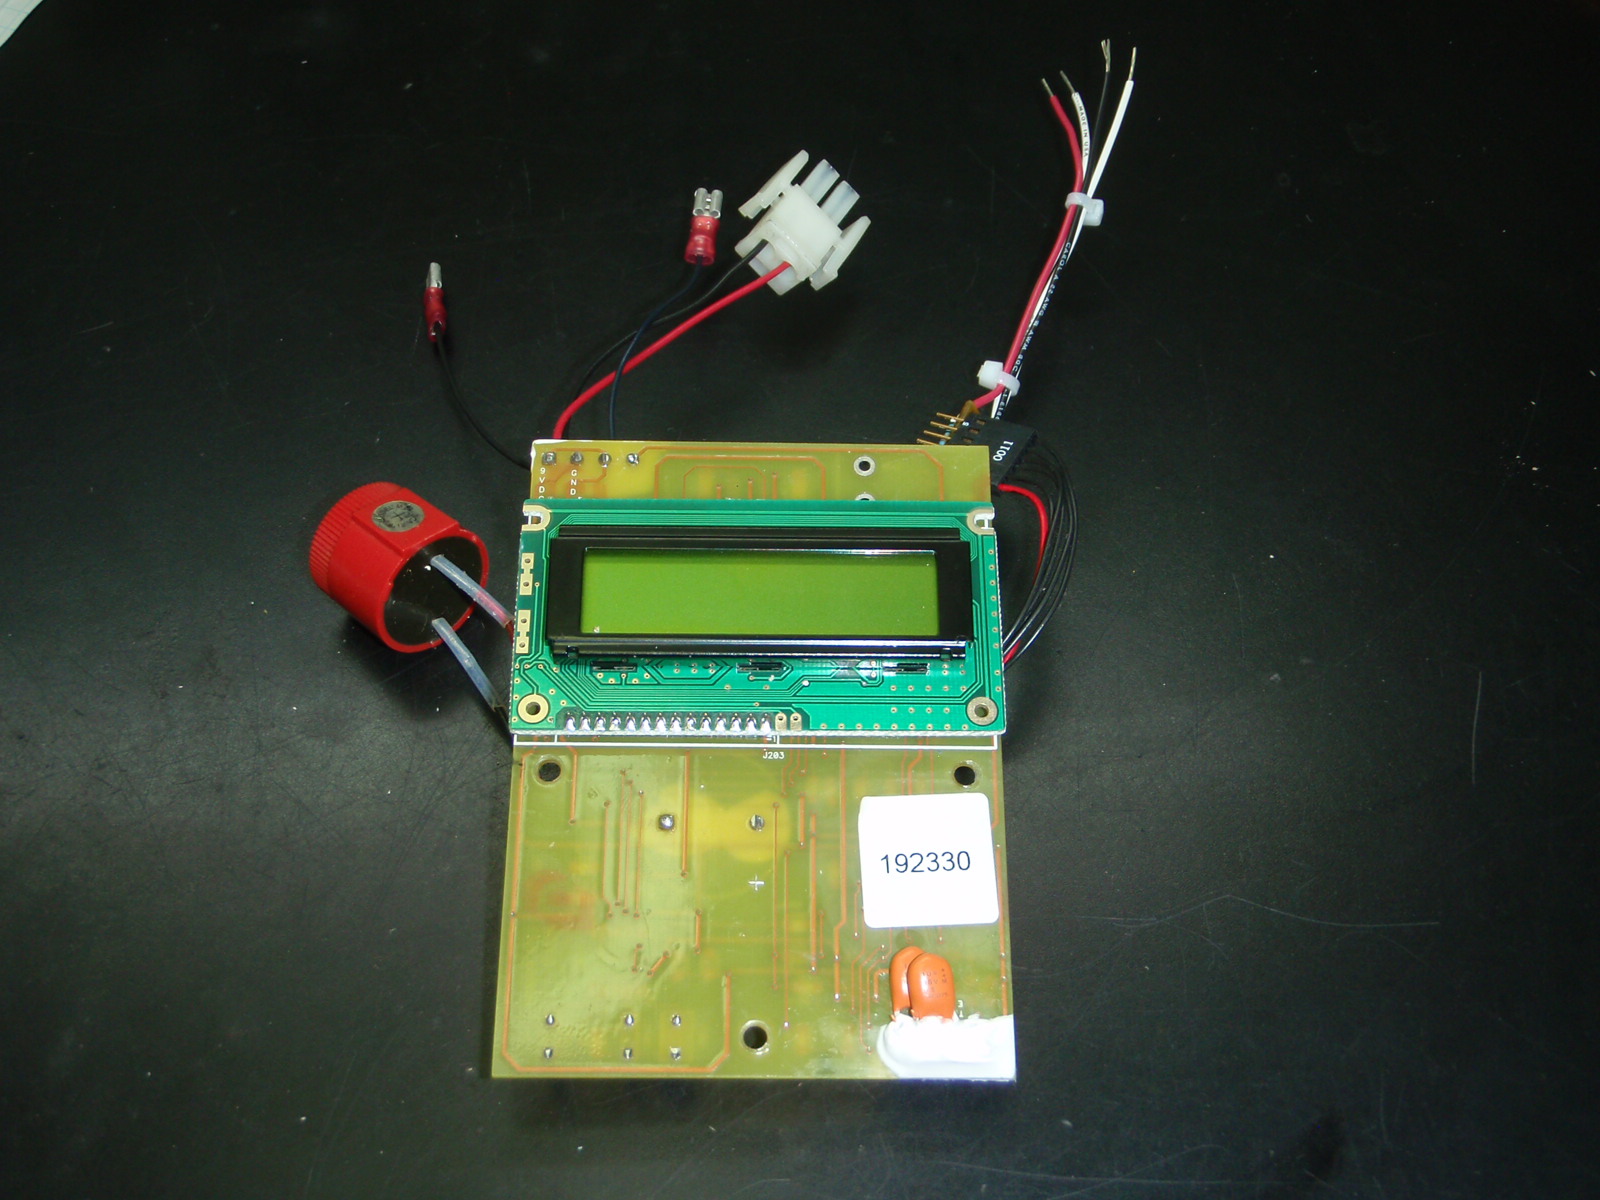 Viper GT circuit board, 981580